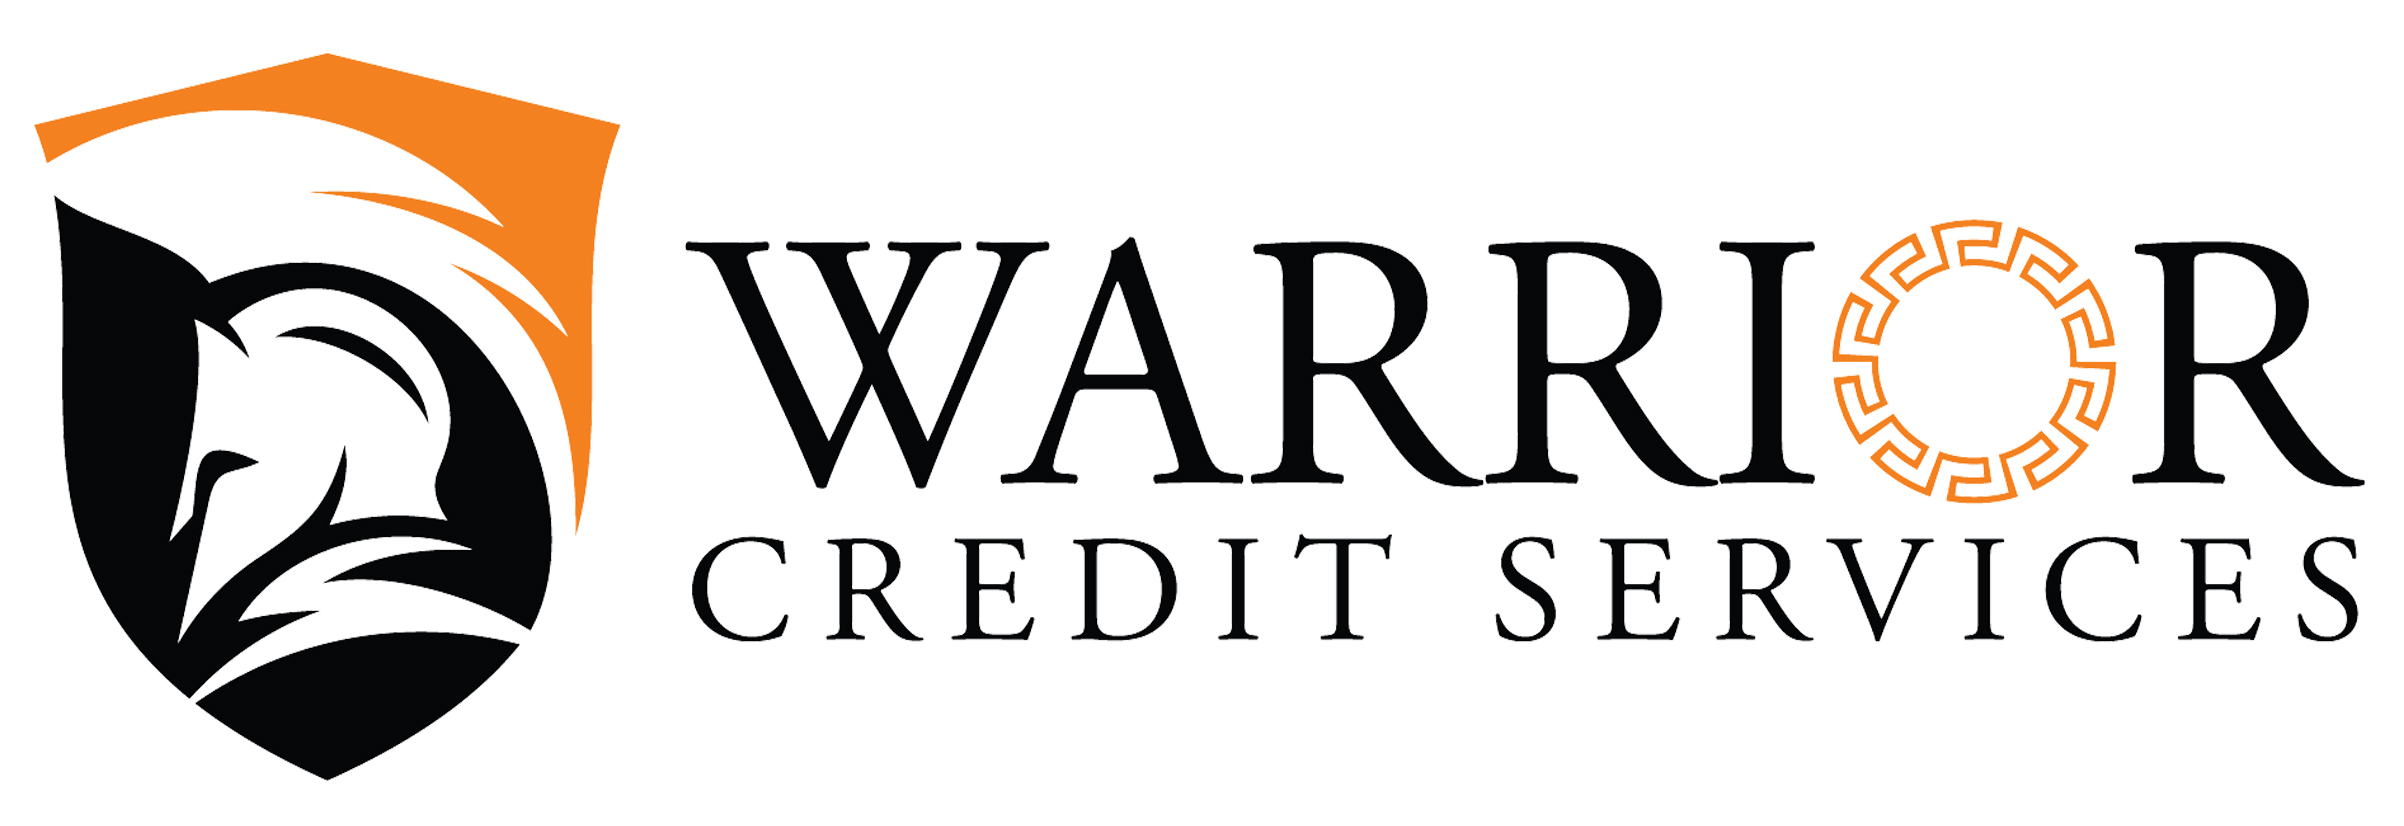 Warrior Credit Services, LLC